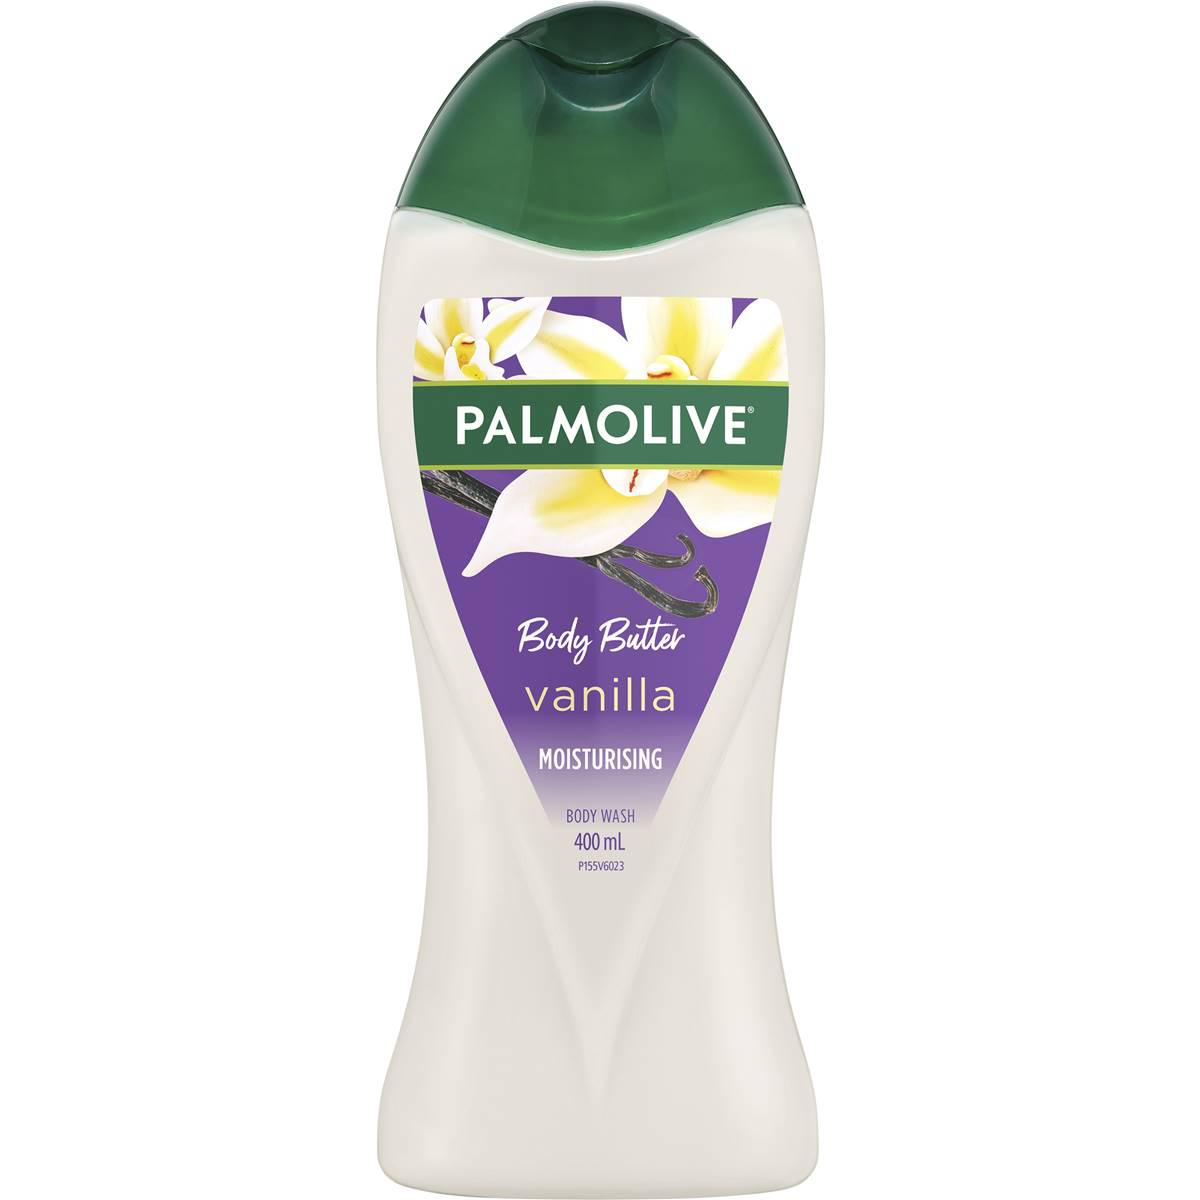 Palmolive Body Butter Heavenly Vanilla Moisturising Body Wash 400ml